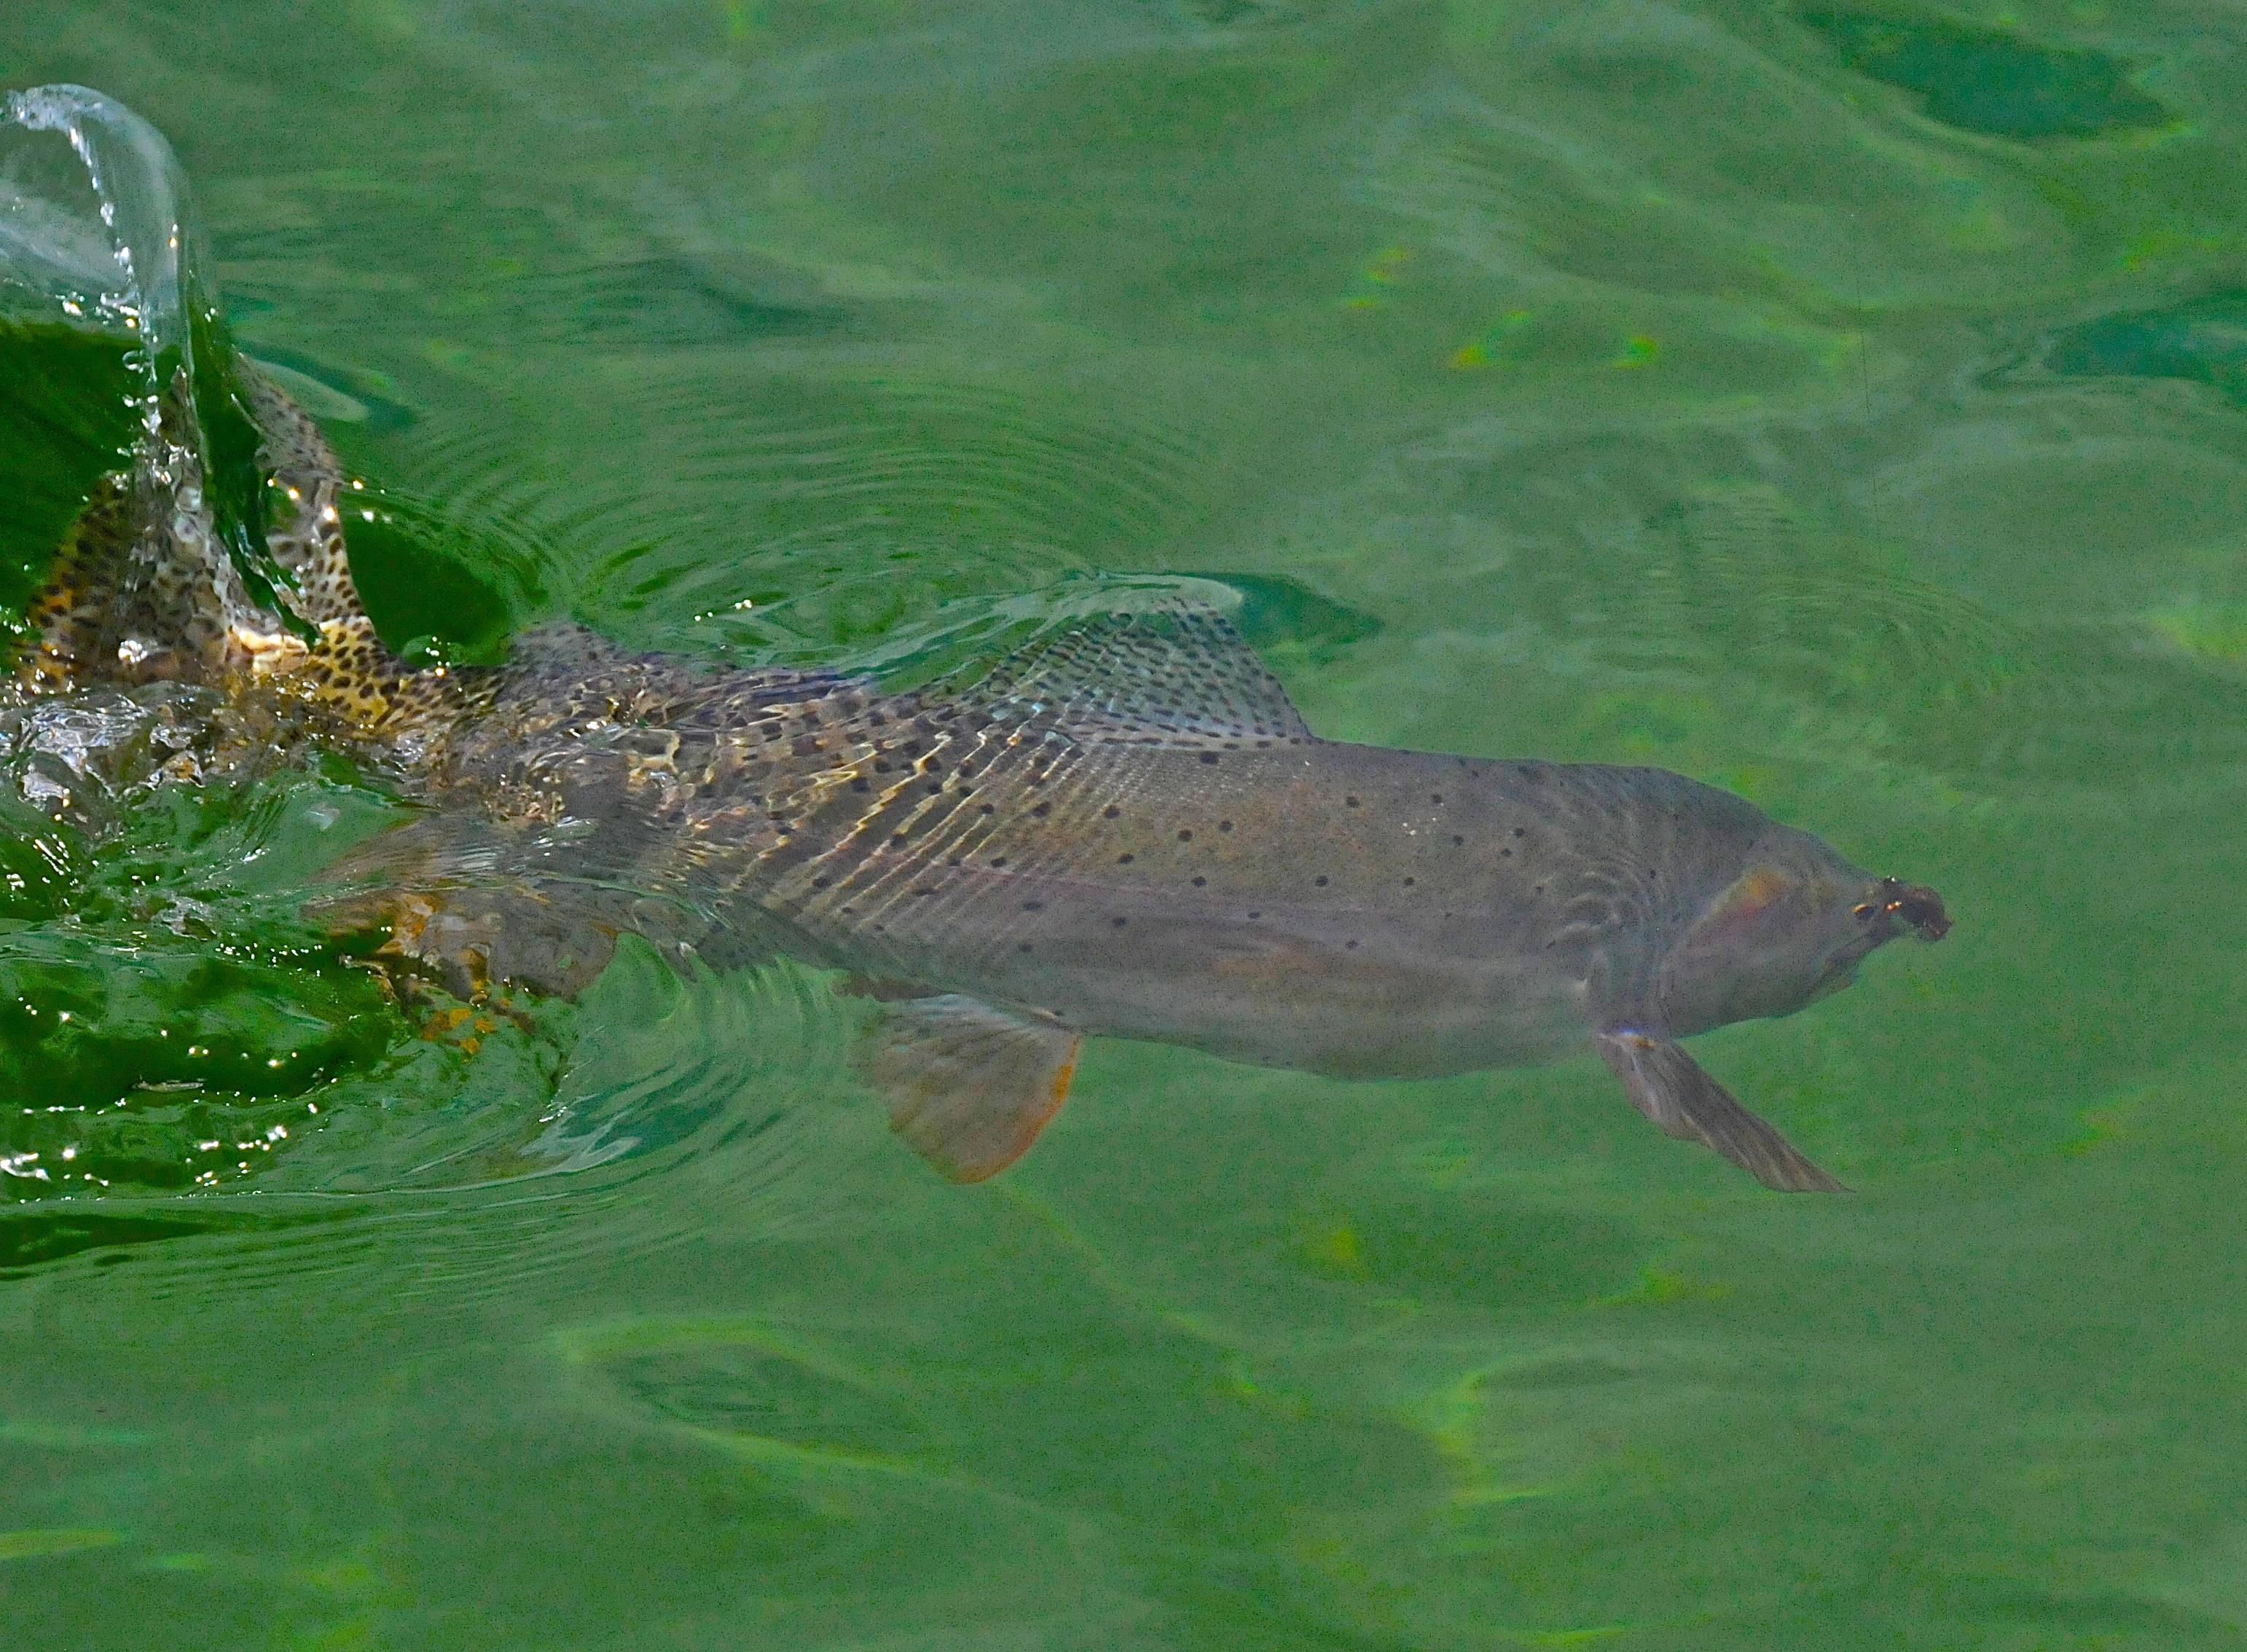 yellowstone lake fishing guides releasing trout